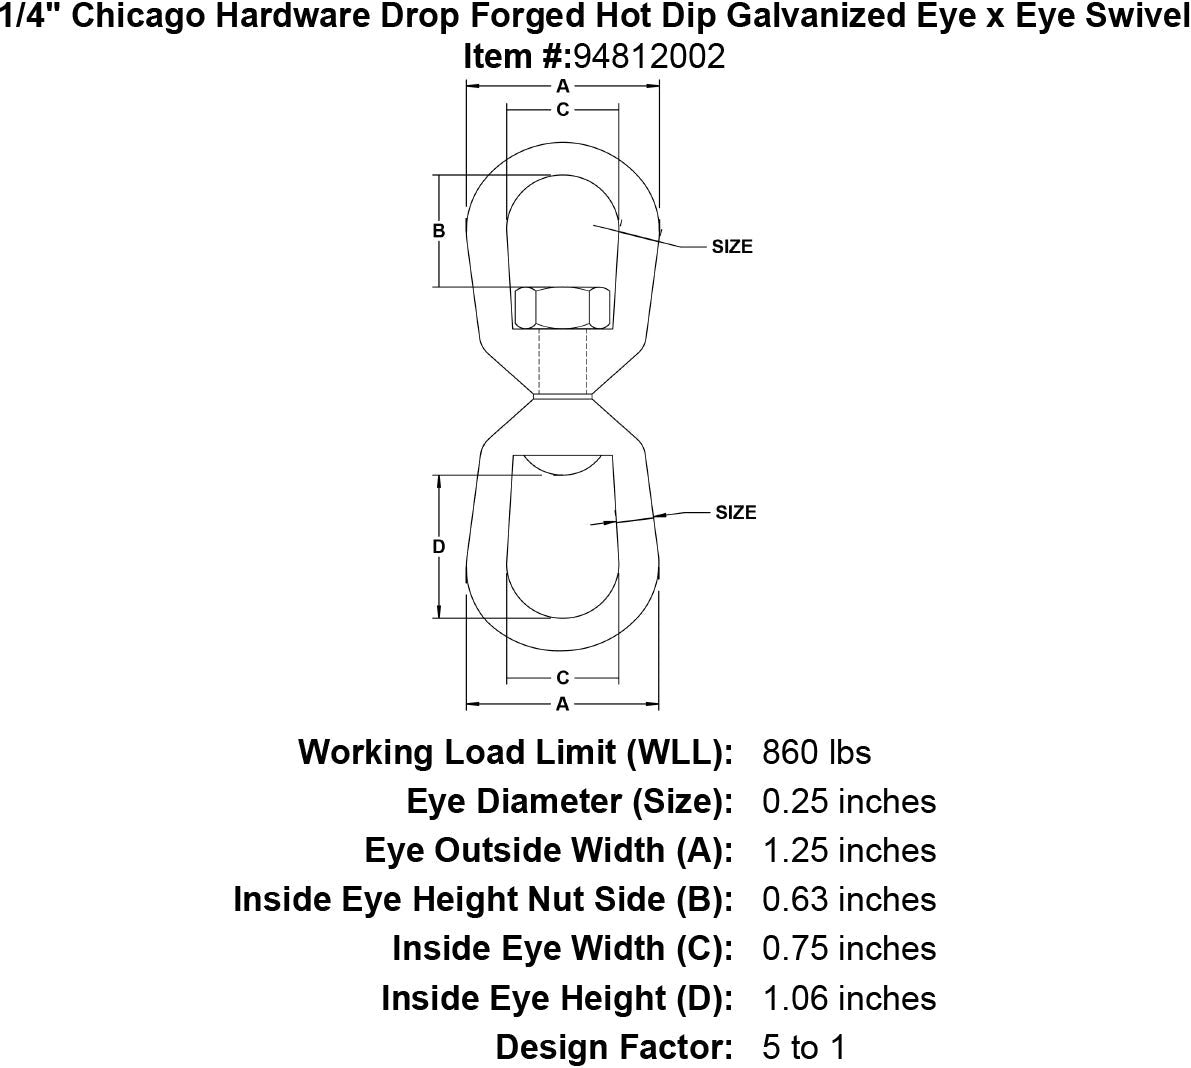 Chicago Hardware Drop Forged Hot Dip Galvanized Eye x Eye Swivels